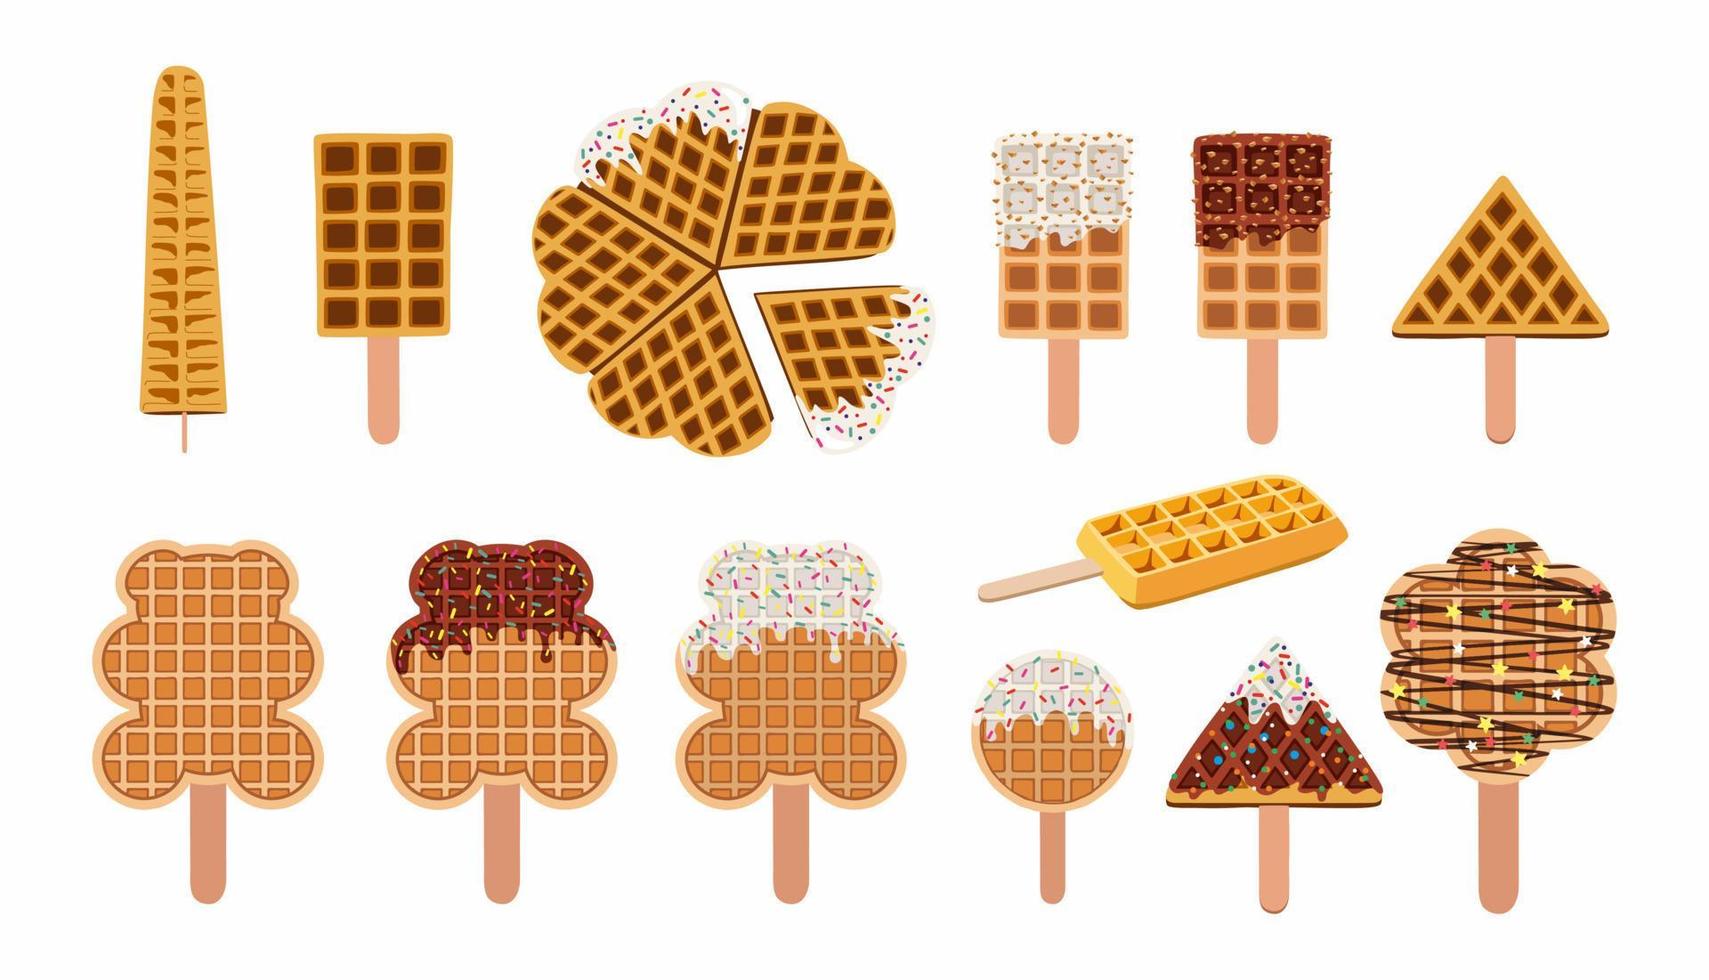 Sweet food and dessert food, vector set illustration of golden brown homemade corn dog waffle on a stick.